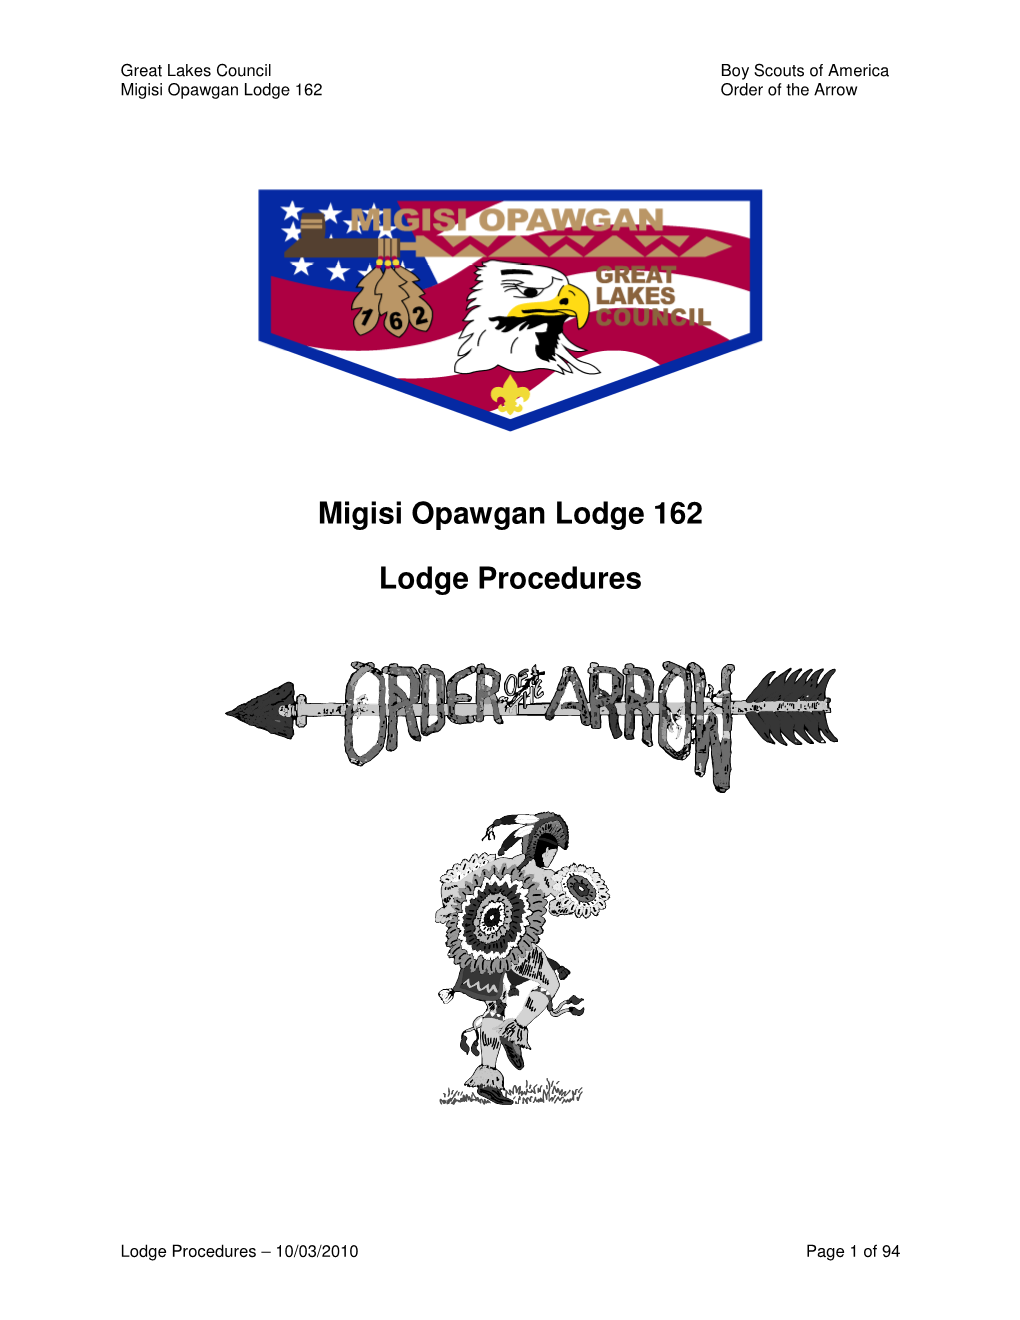 Migisi Opawgan Lodge 162 Lodge Procedures